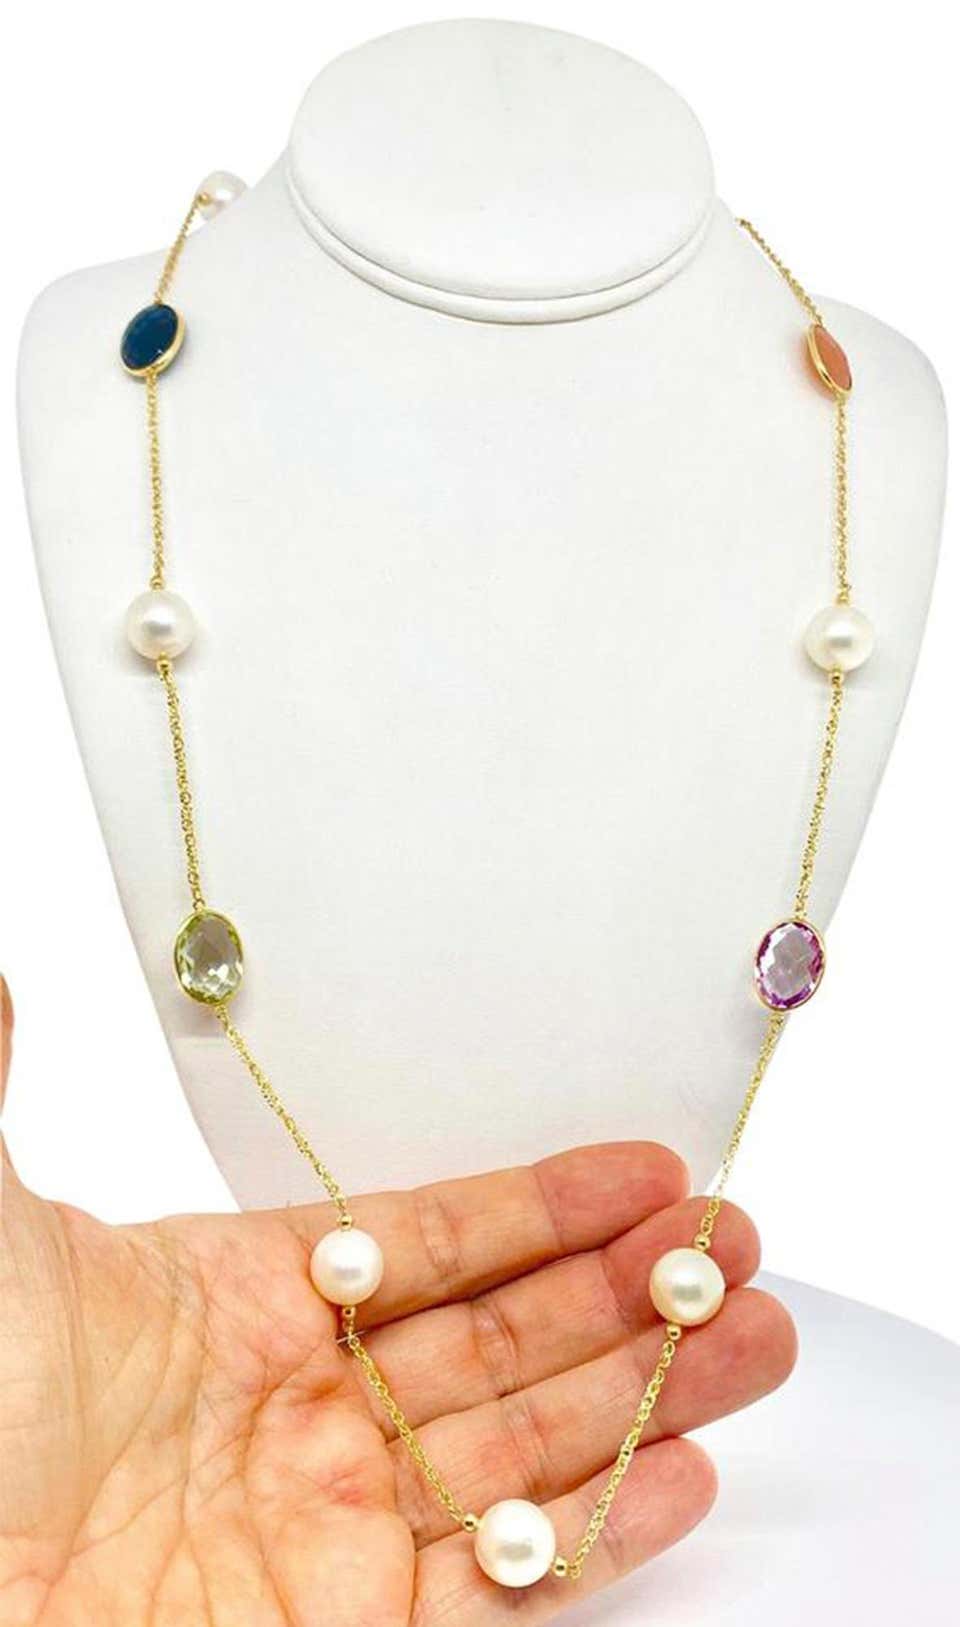 South Sea Pearl Quartz Necklace 14k Gold 12.65 mm 35" Certified $3,950 822109 - Certified Fine Jewelry